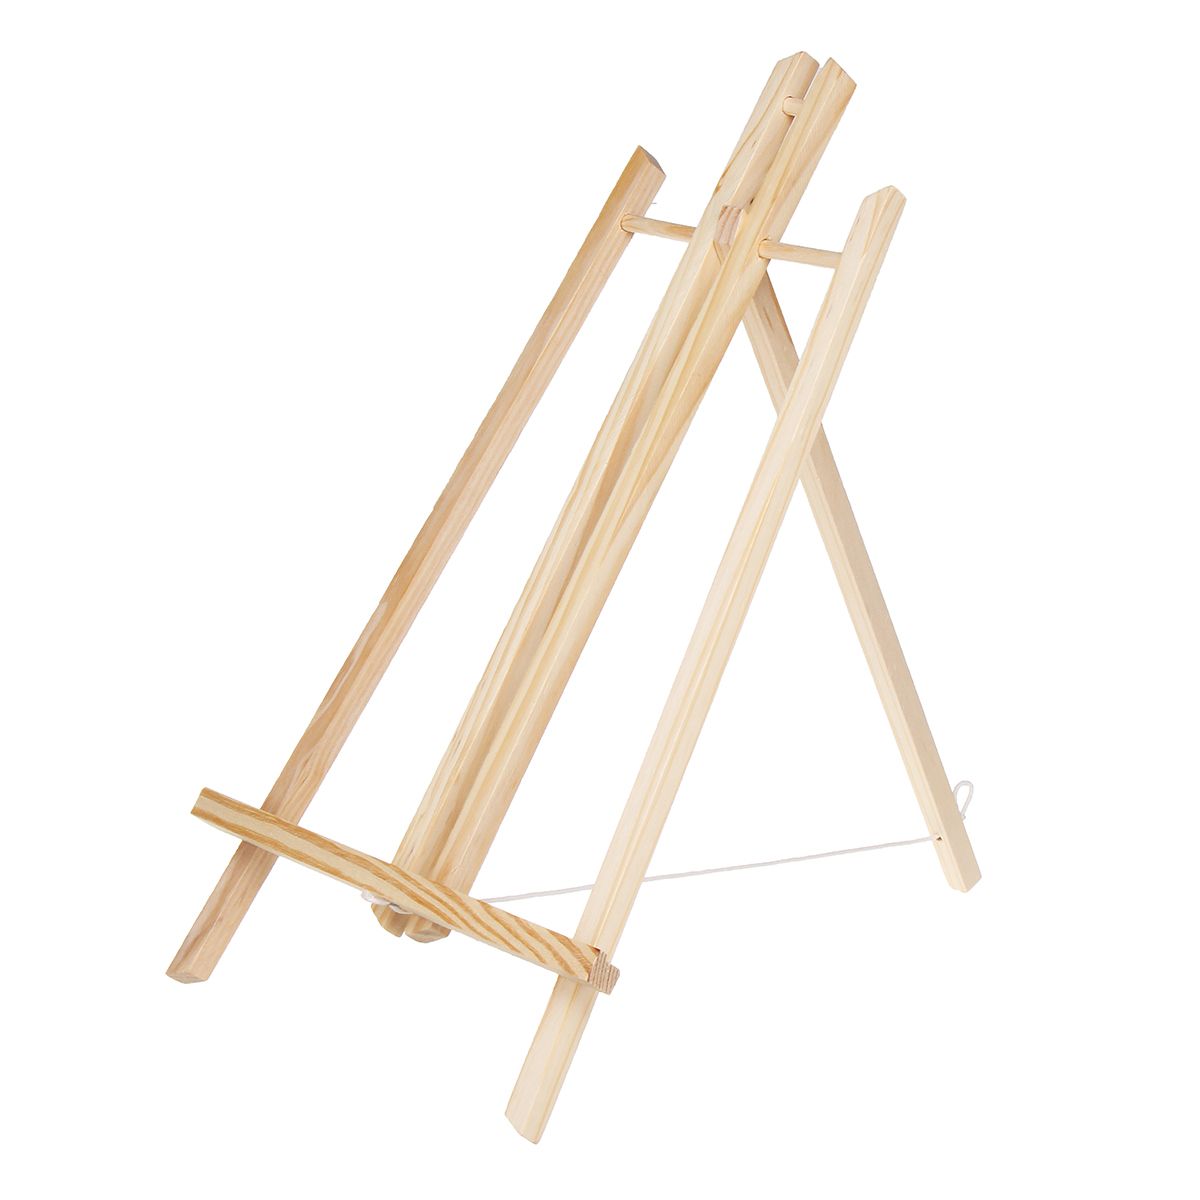 50cm-Table-Top-Display-Beech-Wood-Artist-Art-Easel-Craft-Wooden-Photo-Frame-Stand-Holder-1404228